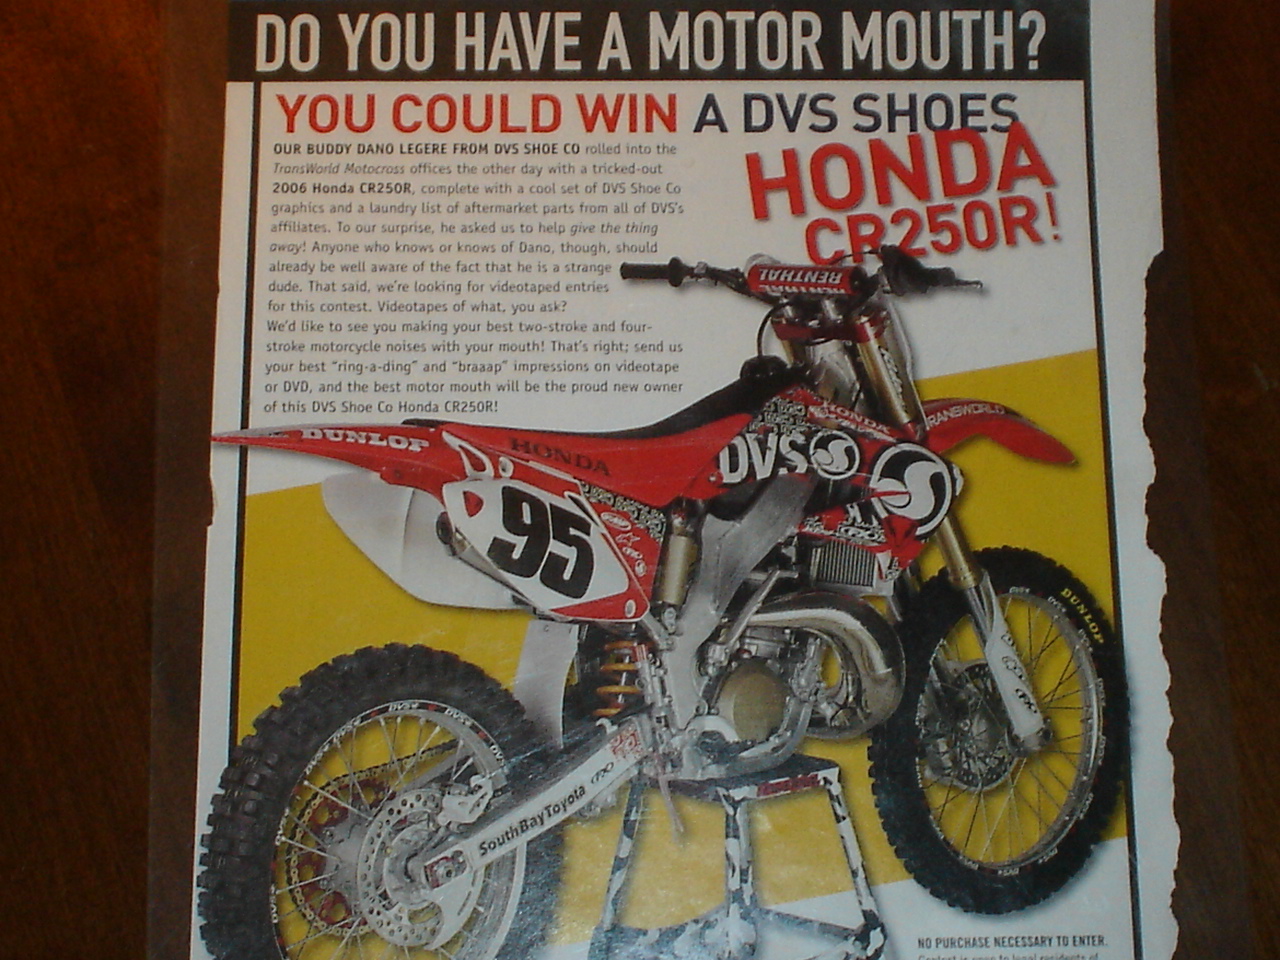 2006 Moto mouth Winner through the USA